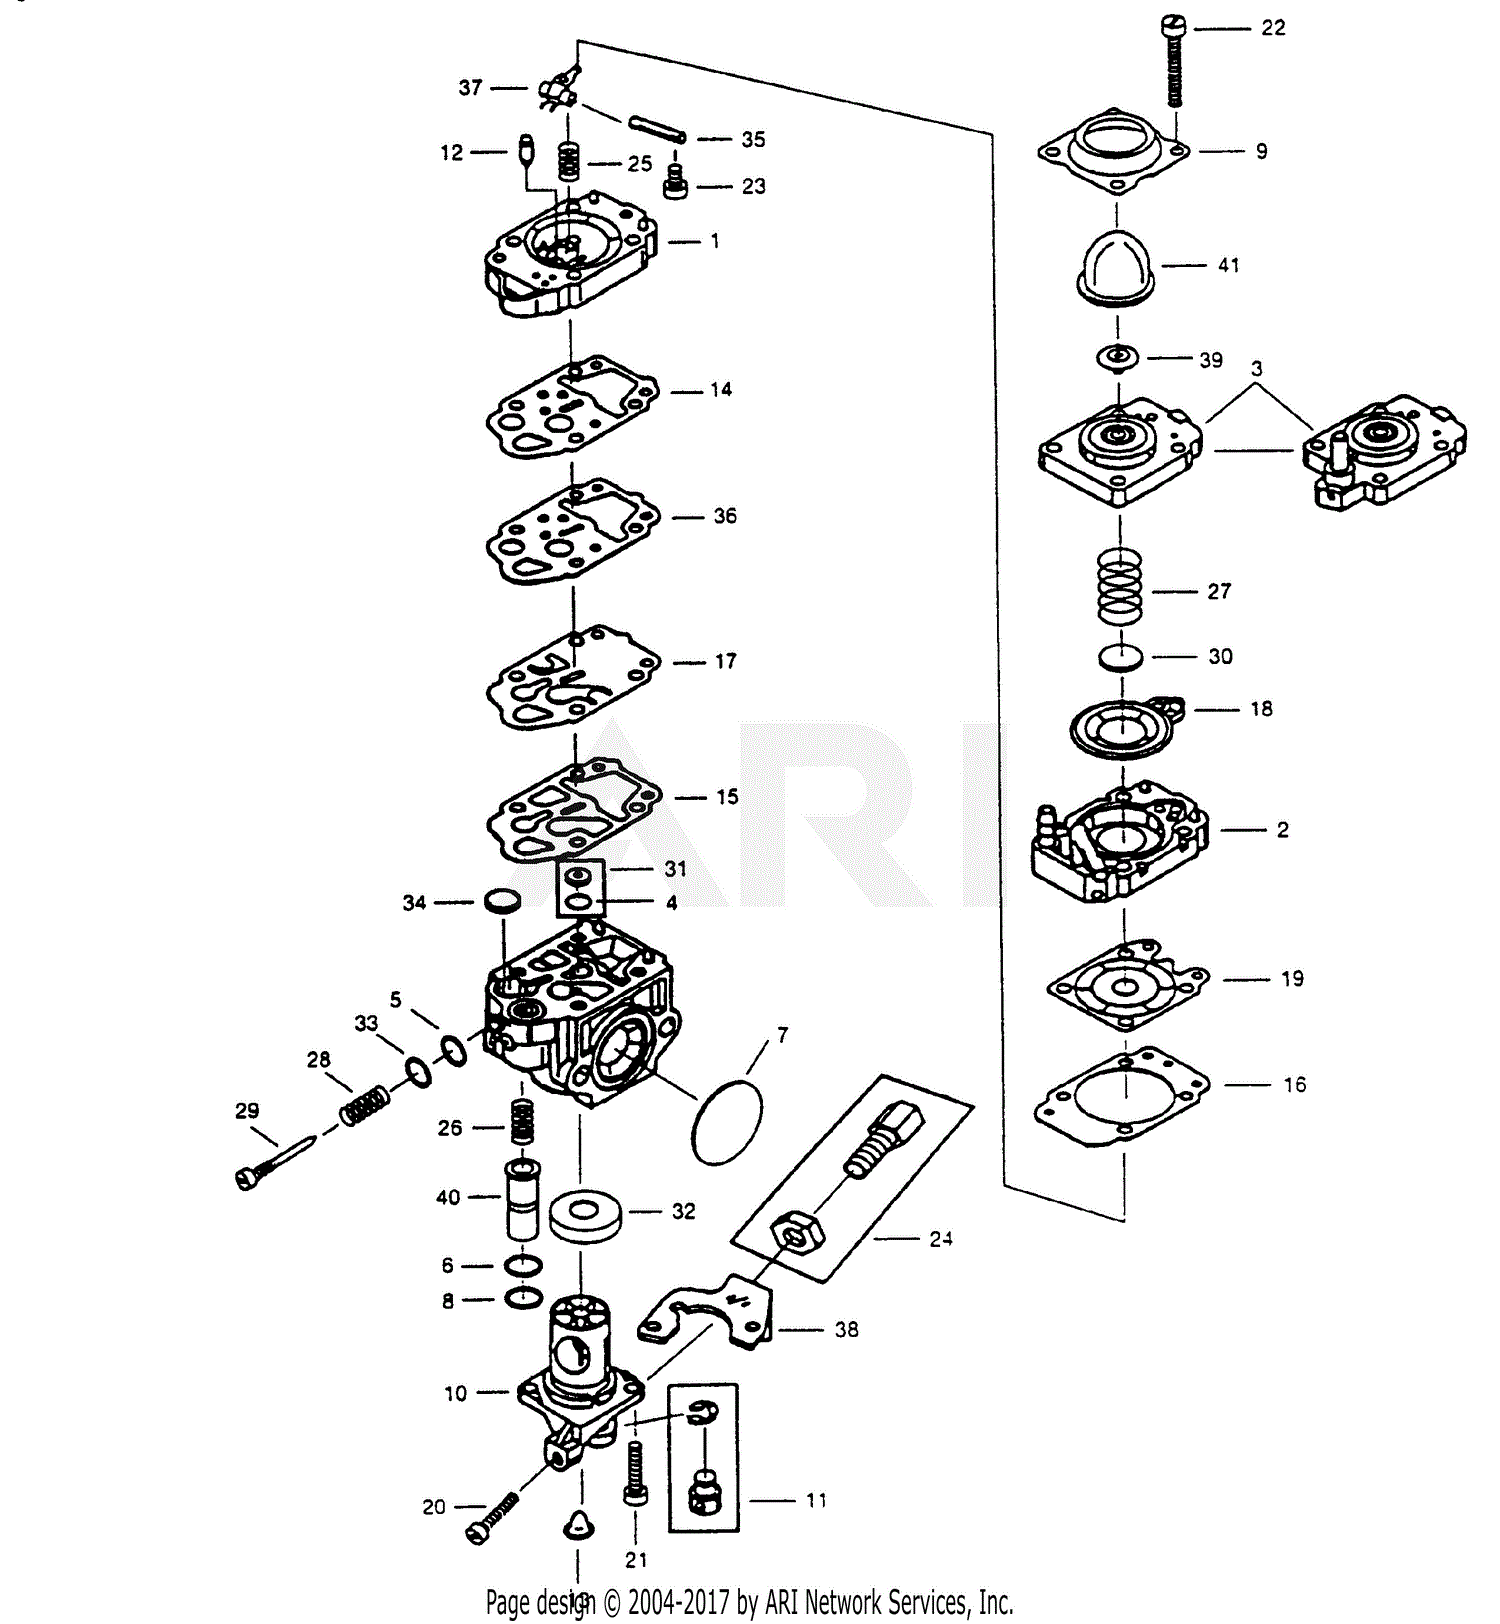 Gasket & Diaphragm Kit for KAWASAKI Models w/ WALBRO WYK Carburetors